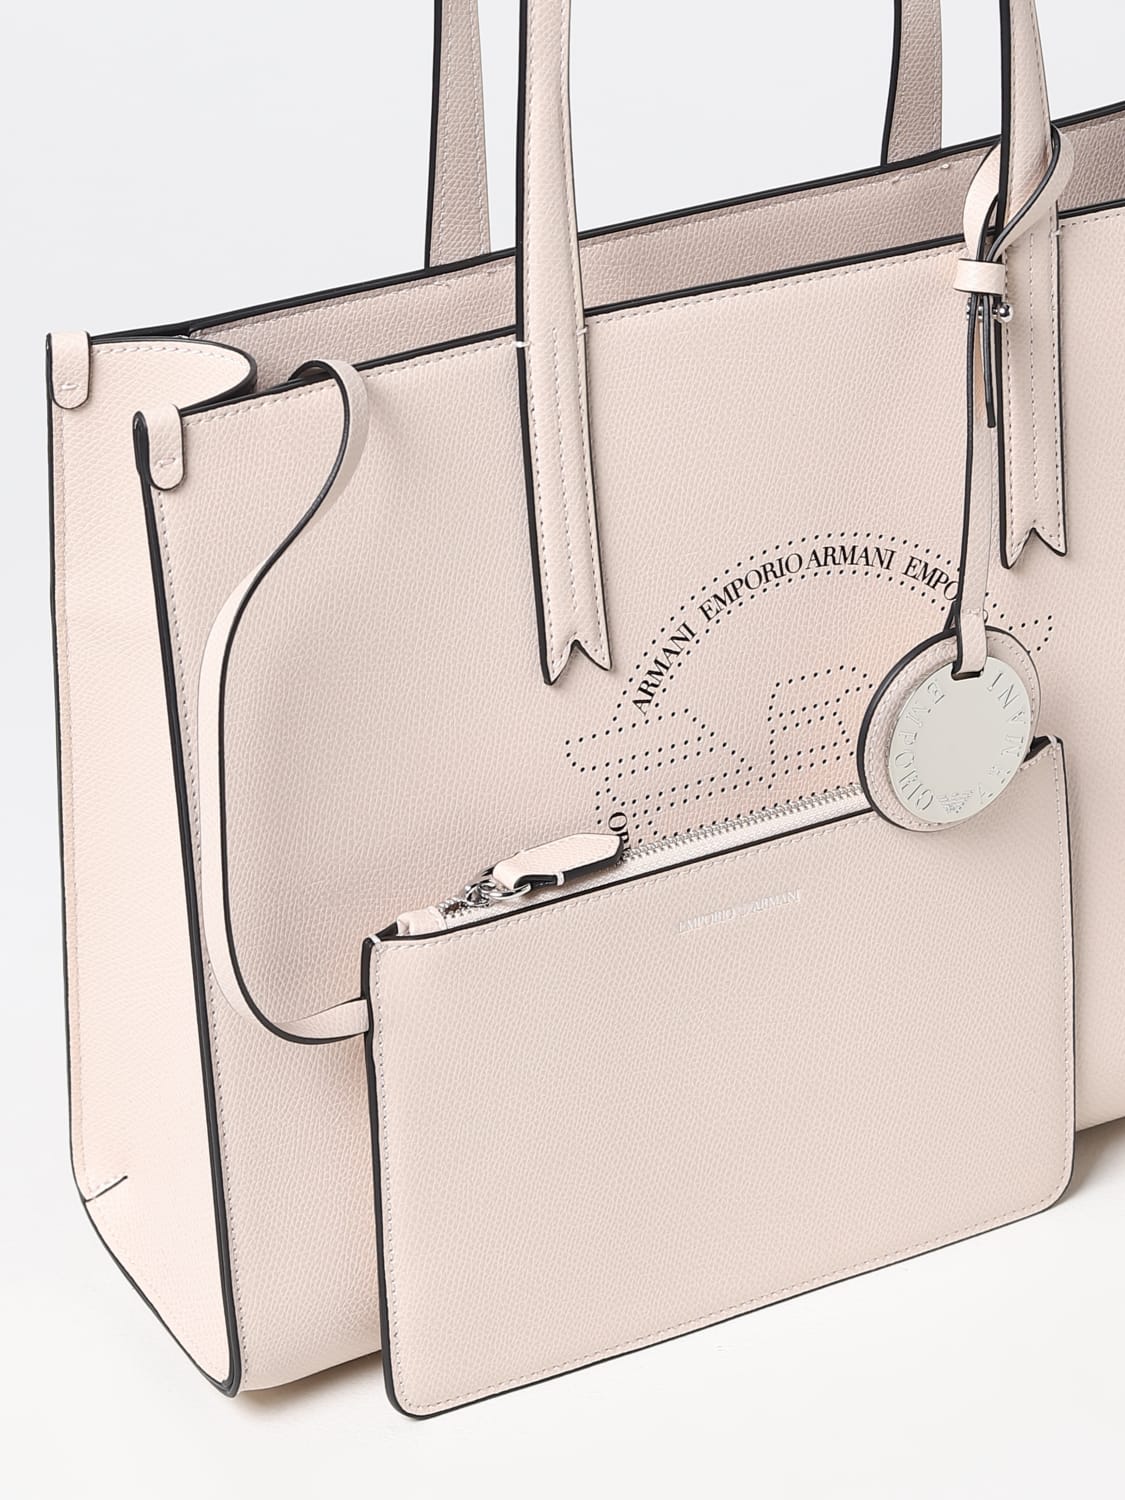 EMPORIO ARMANI: bag in grained synthetic leather - Nude | Emporio Armani tote bags online on GIGLIO.COM